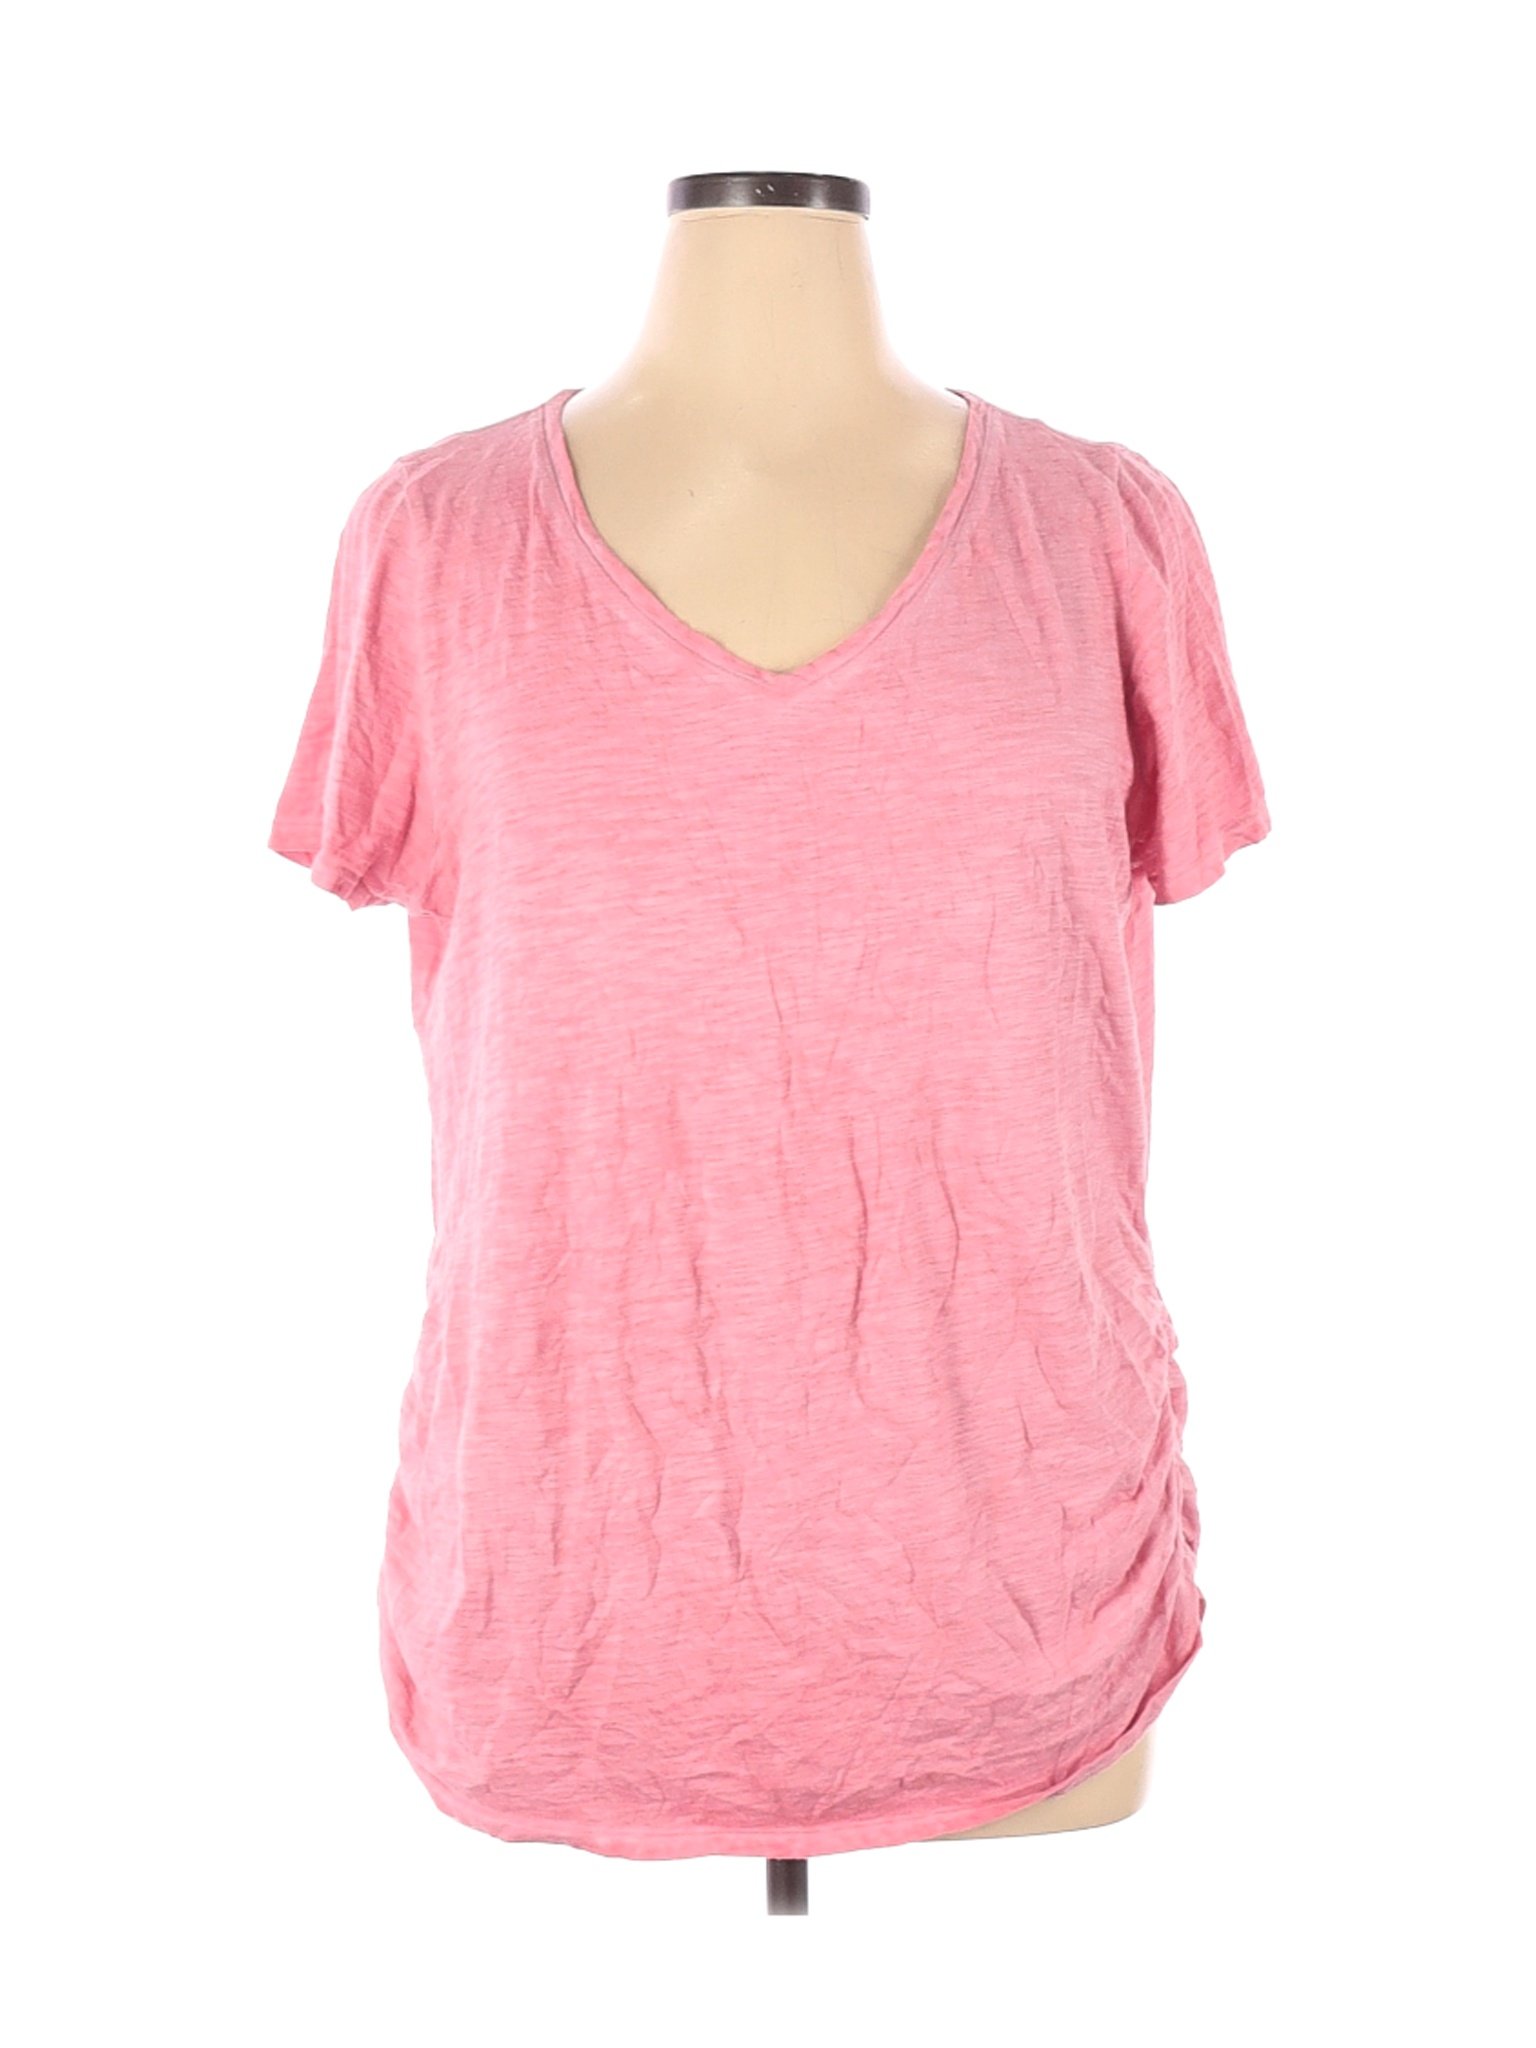 Lane Bryant Women Pink Short Sleeve T-Shirt 14 Plus | eBay